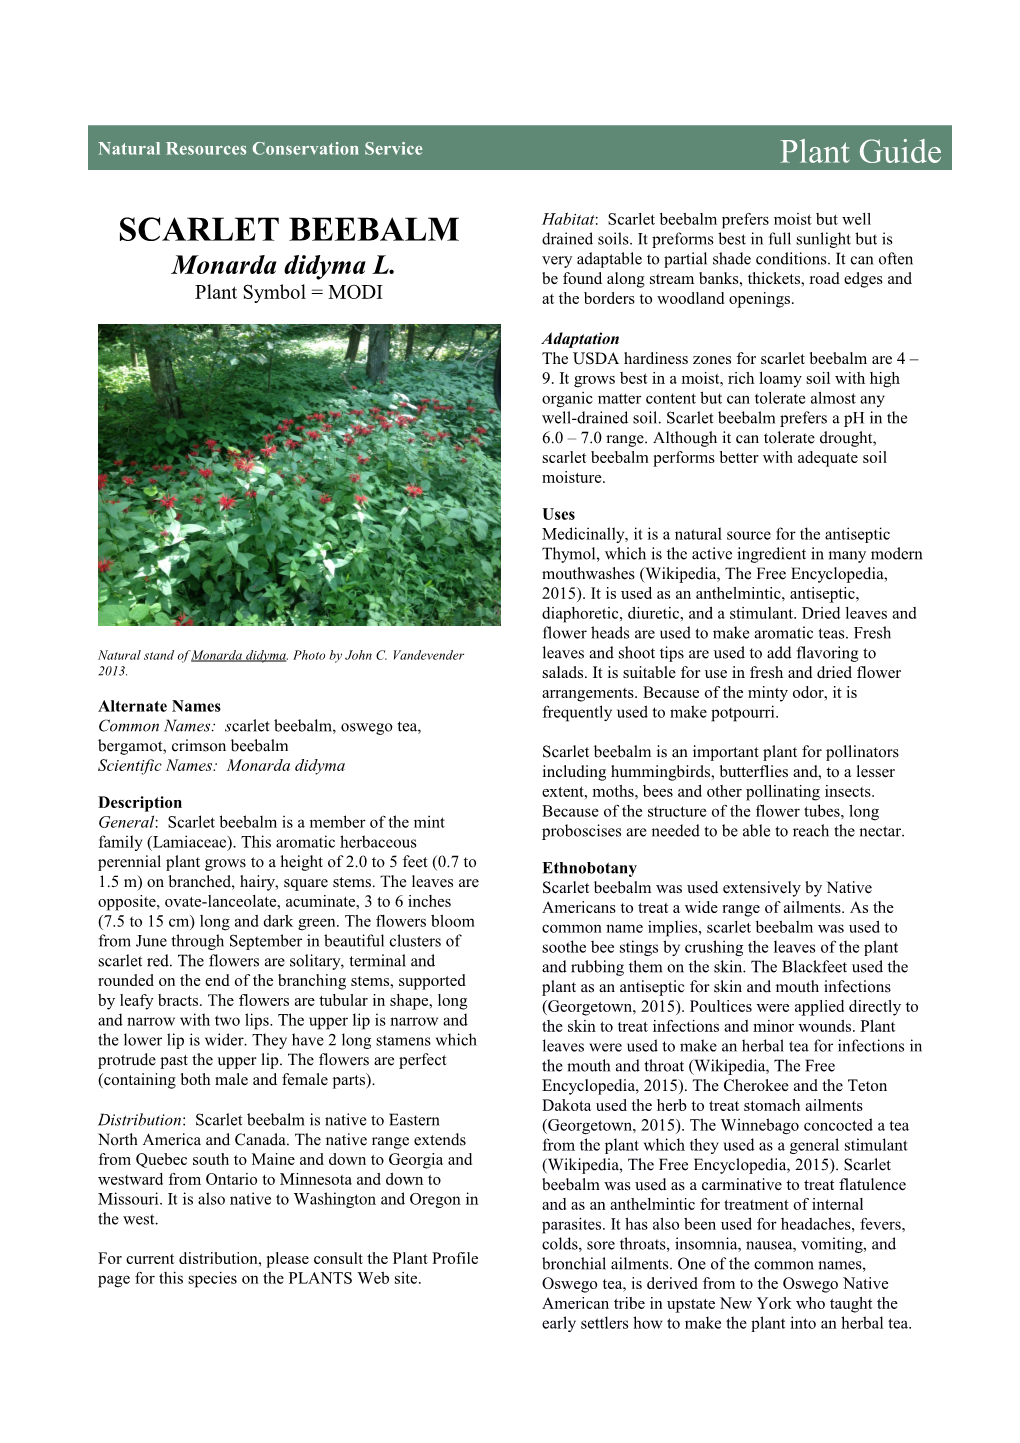 Scarlet Beebalm (Monarda Didyma) Plant Guide